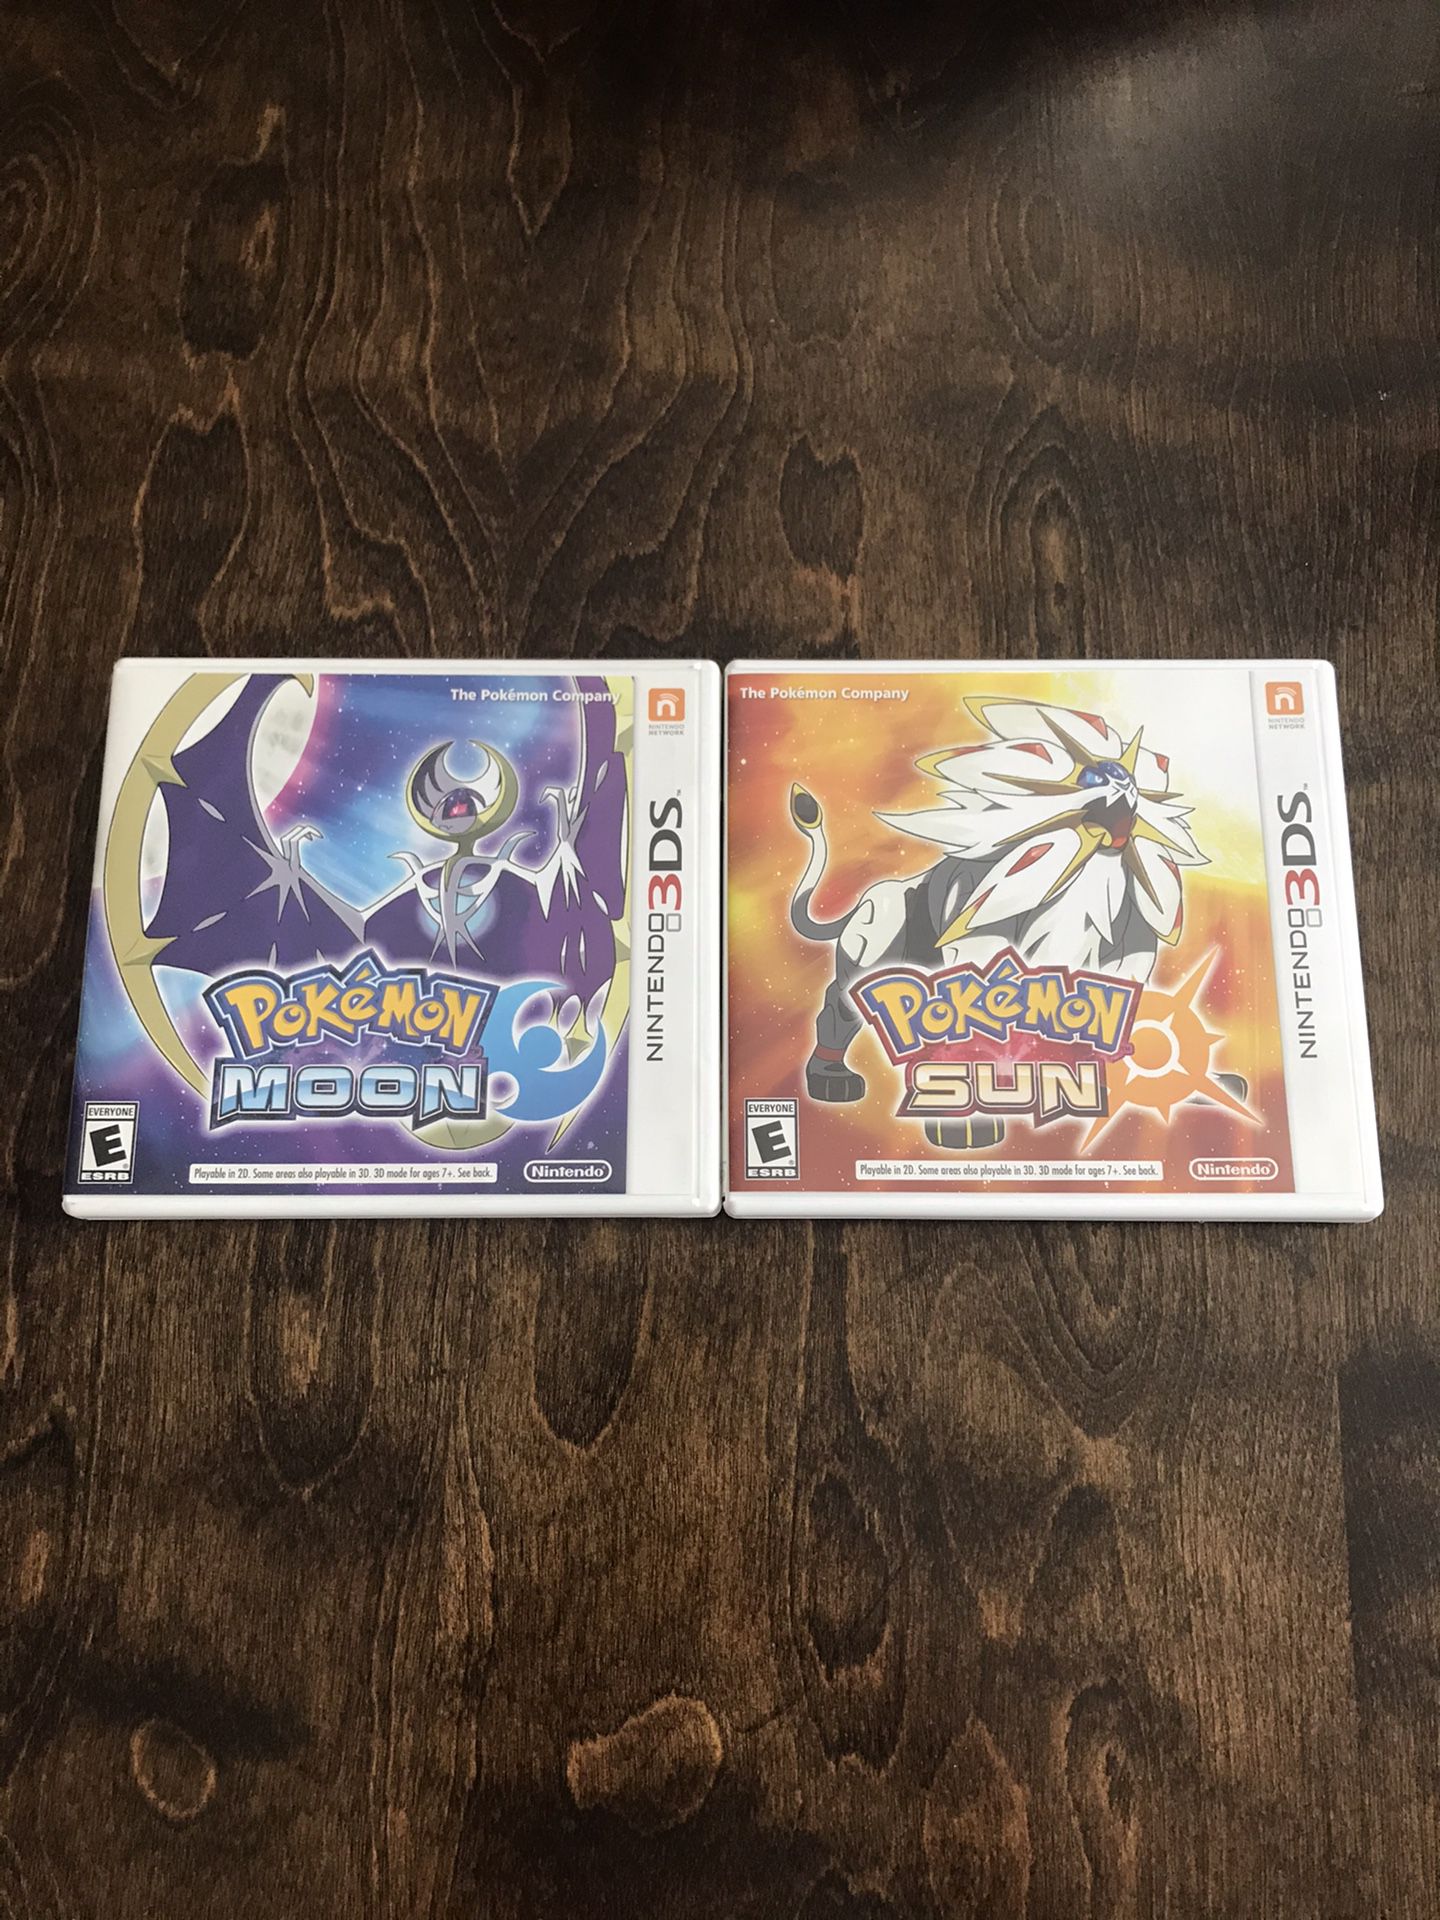 Nintendo Pokémon Sun and Moon for the Nintendo 3DS